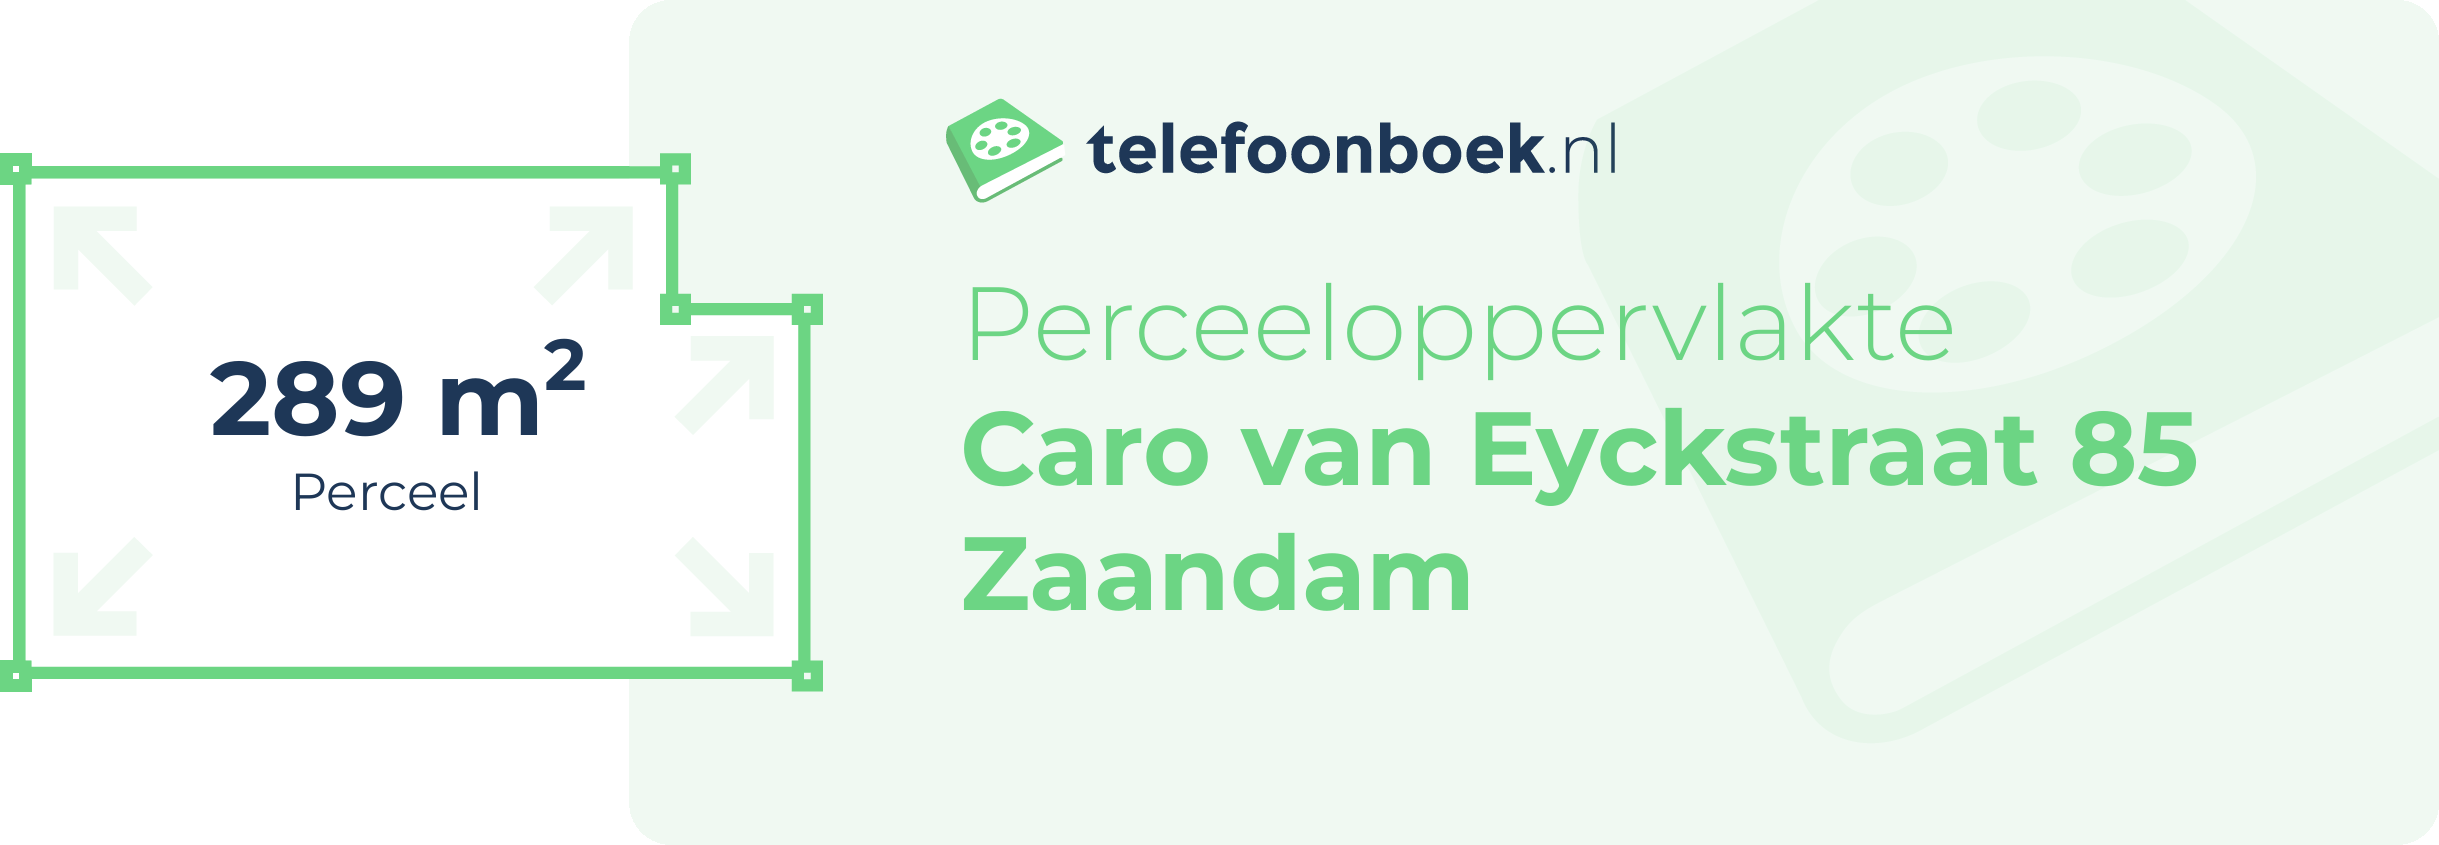 Perceeloppervlakte Caro Van Eyckstraat 85 Zaandam